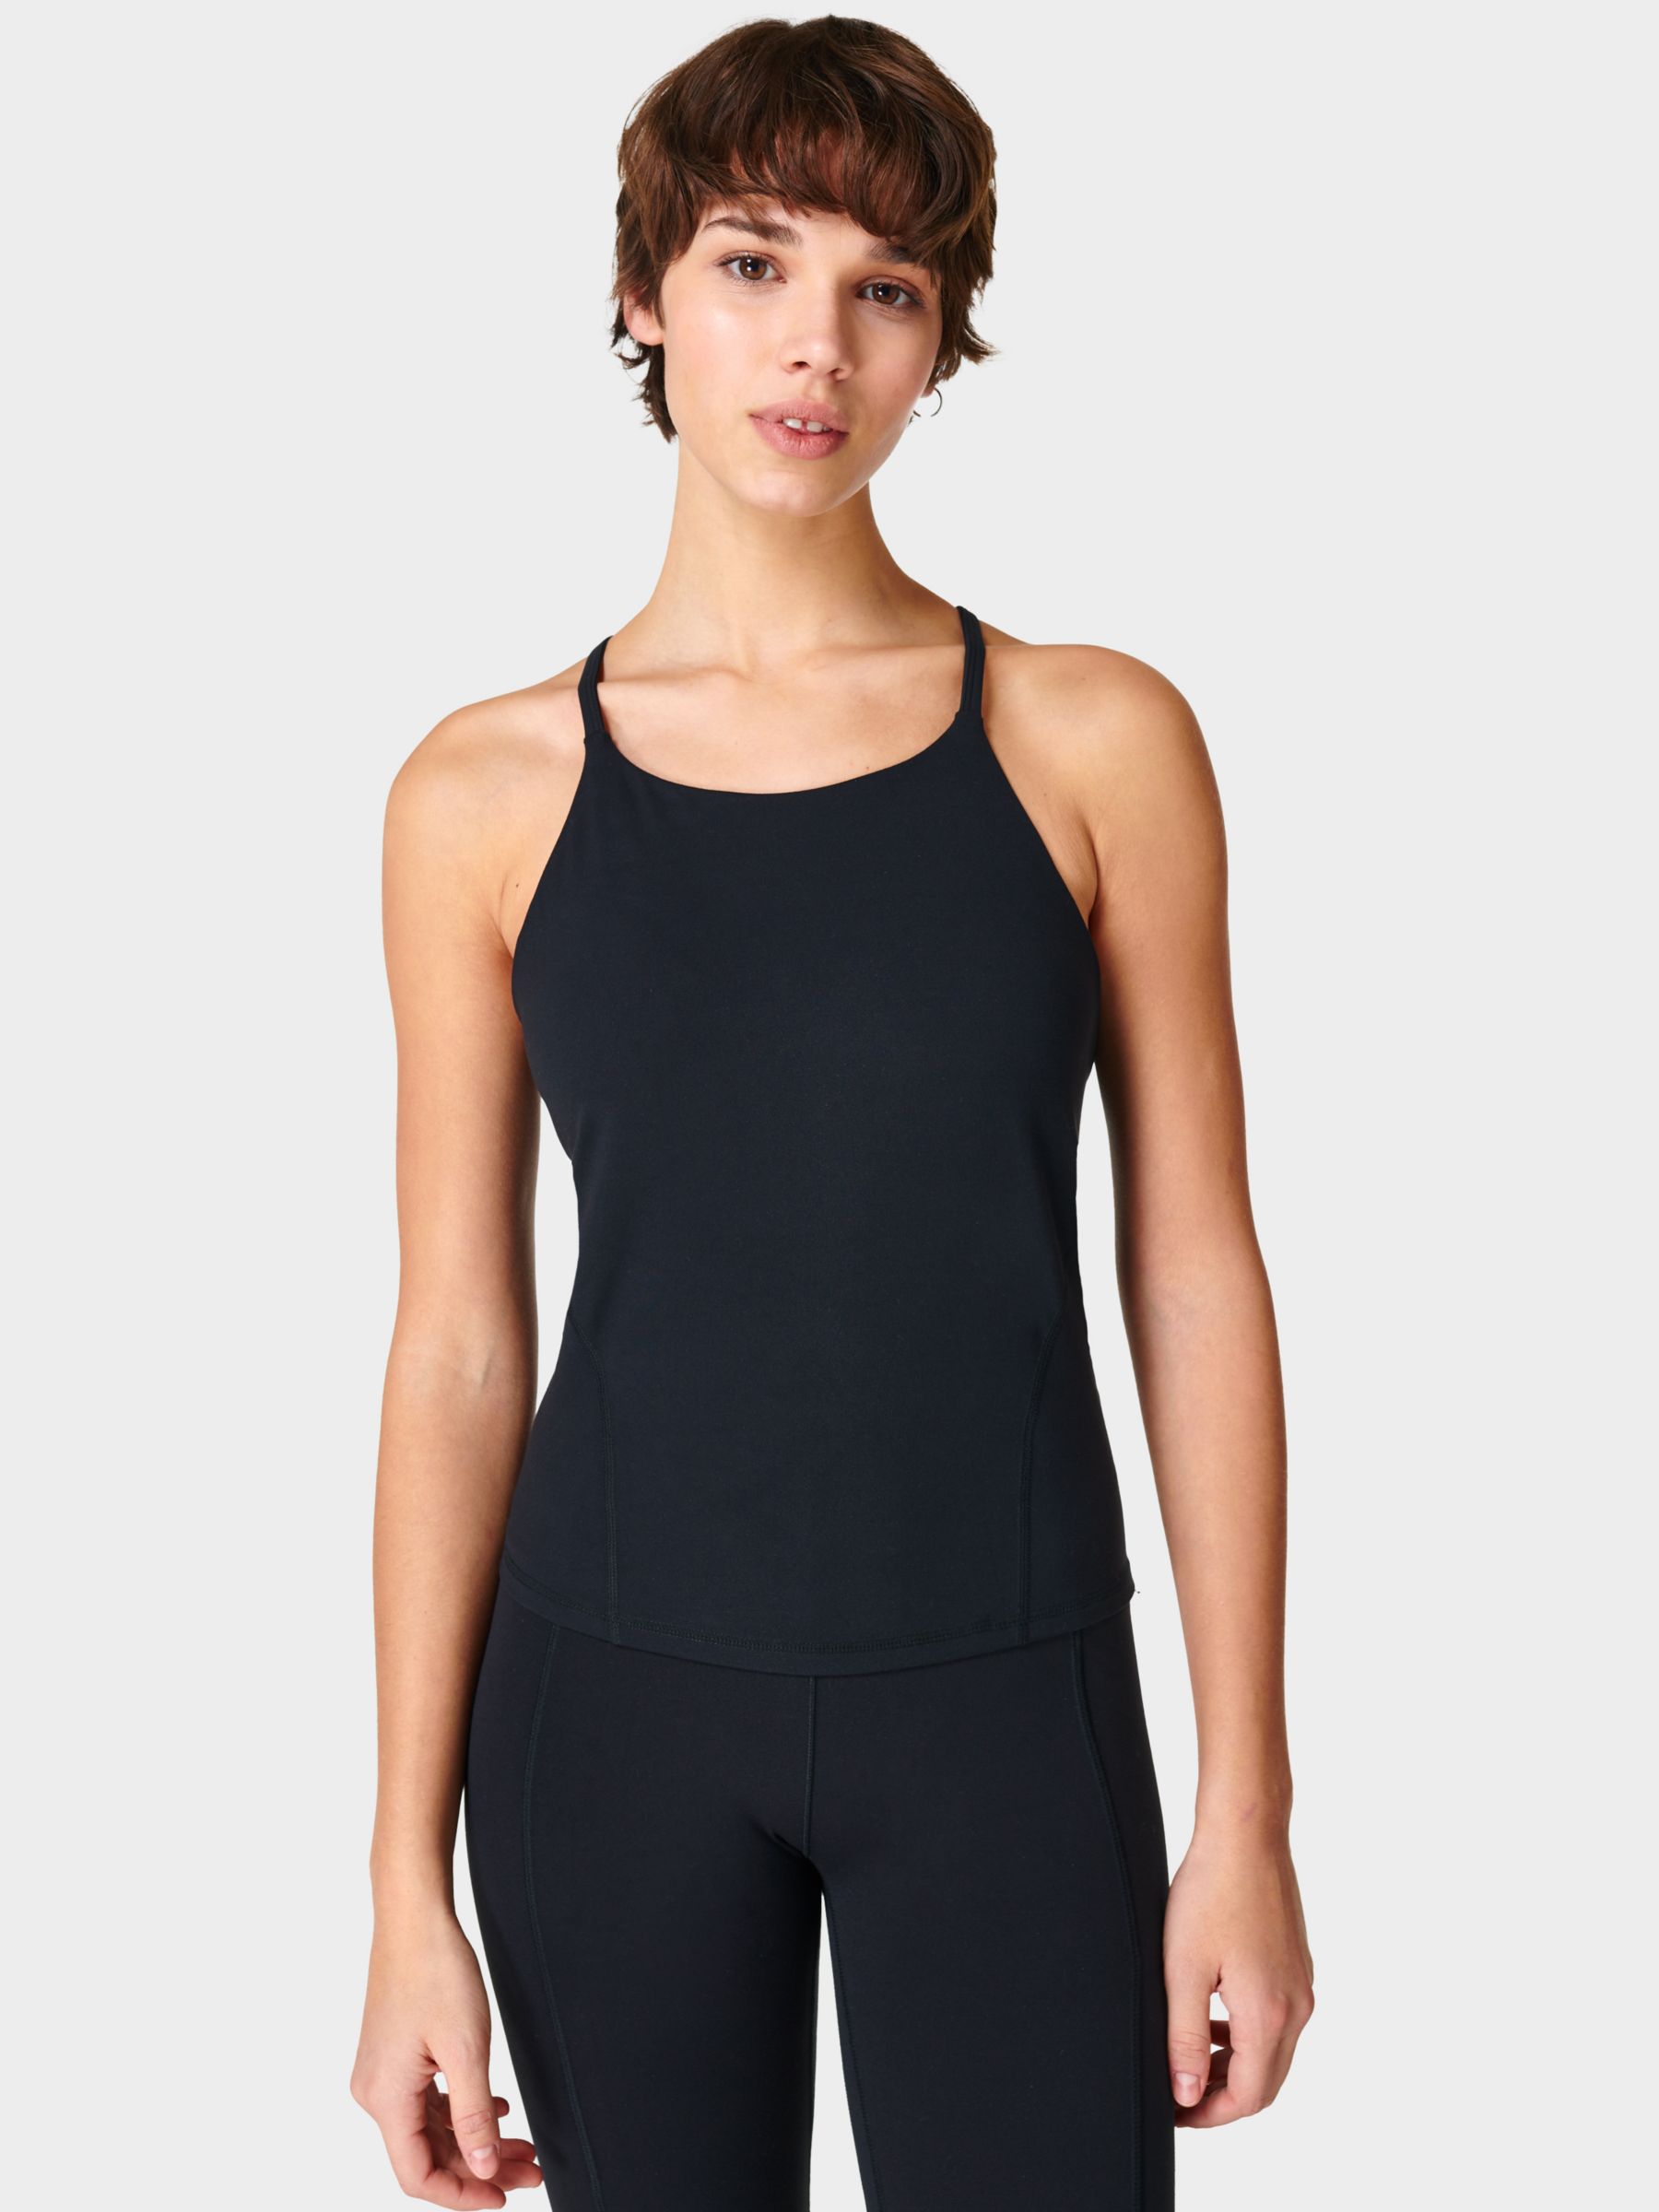 Sweaty Betty Super Soft Yoga Vest, Black, XXS